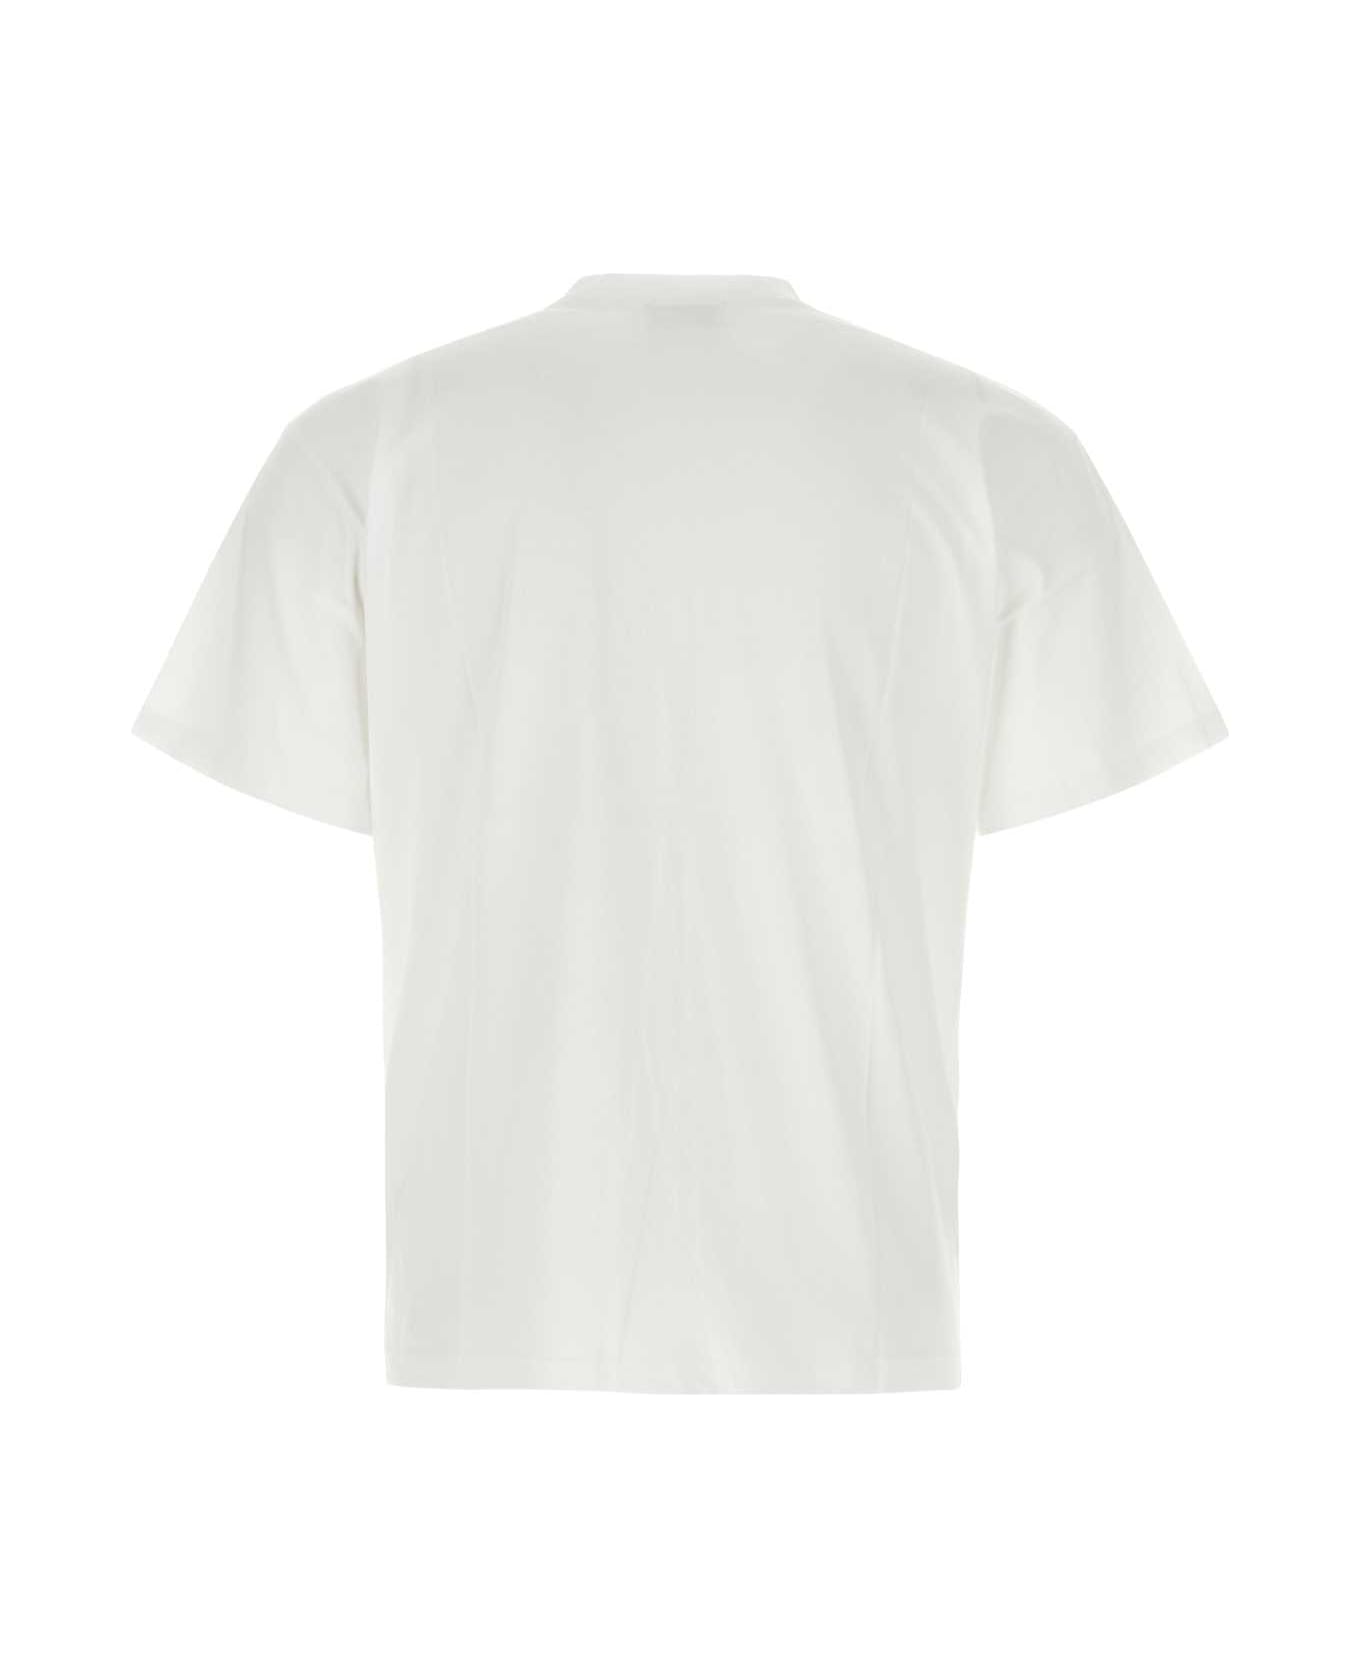 Aries White Cotton Temple T-shirt - WHITE